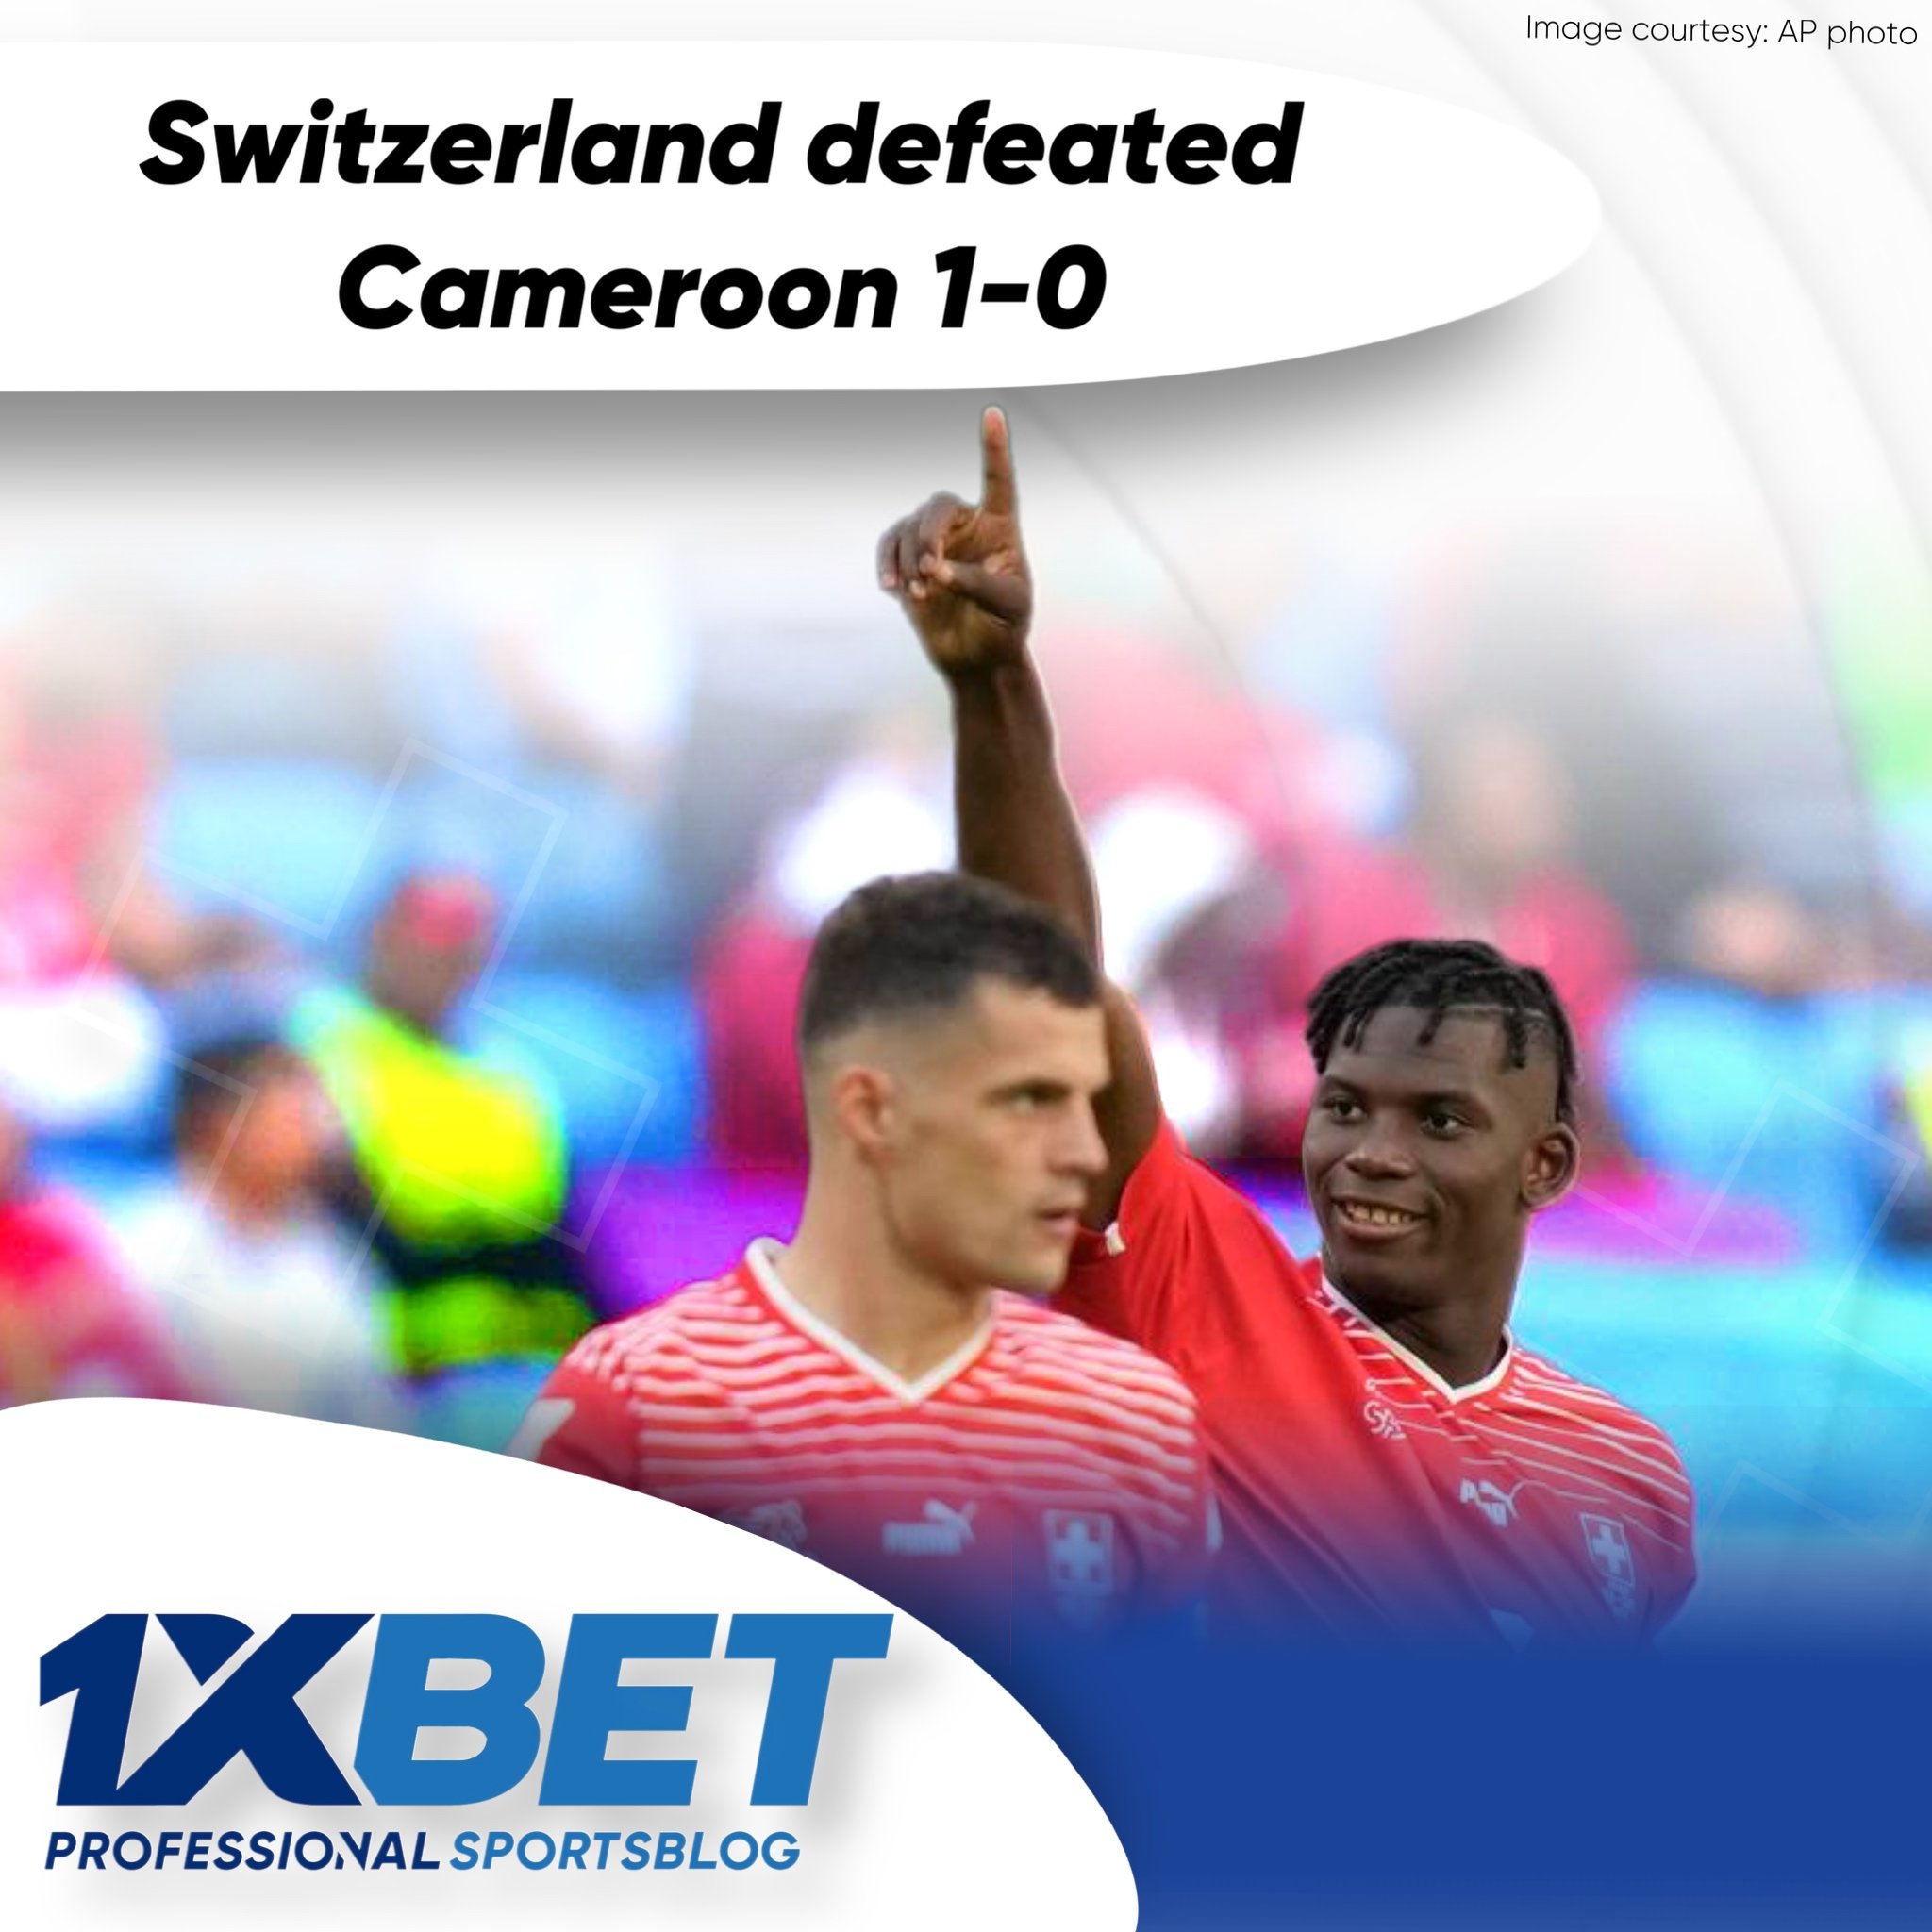 Switzerland defeated Cameroon 1-0